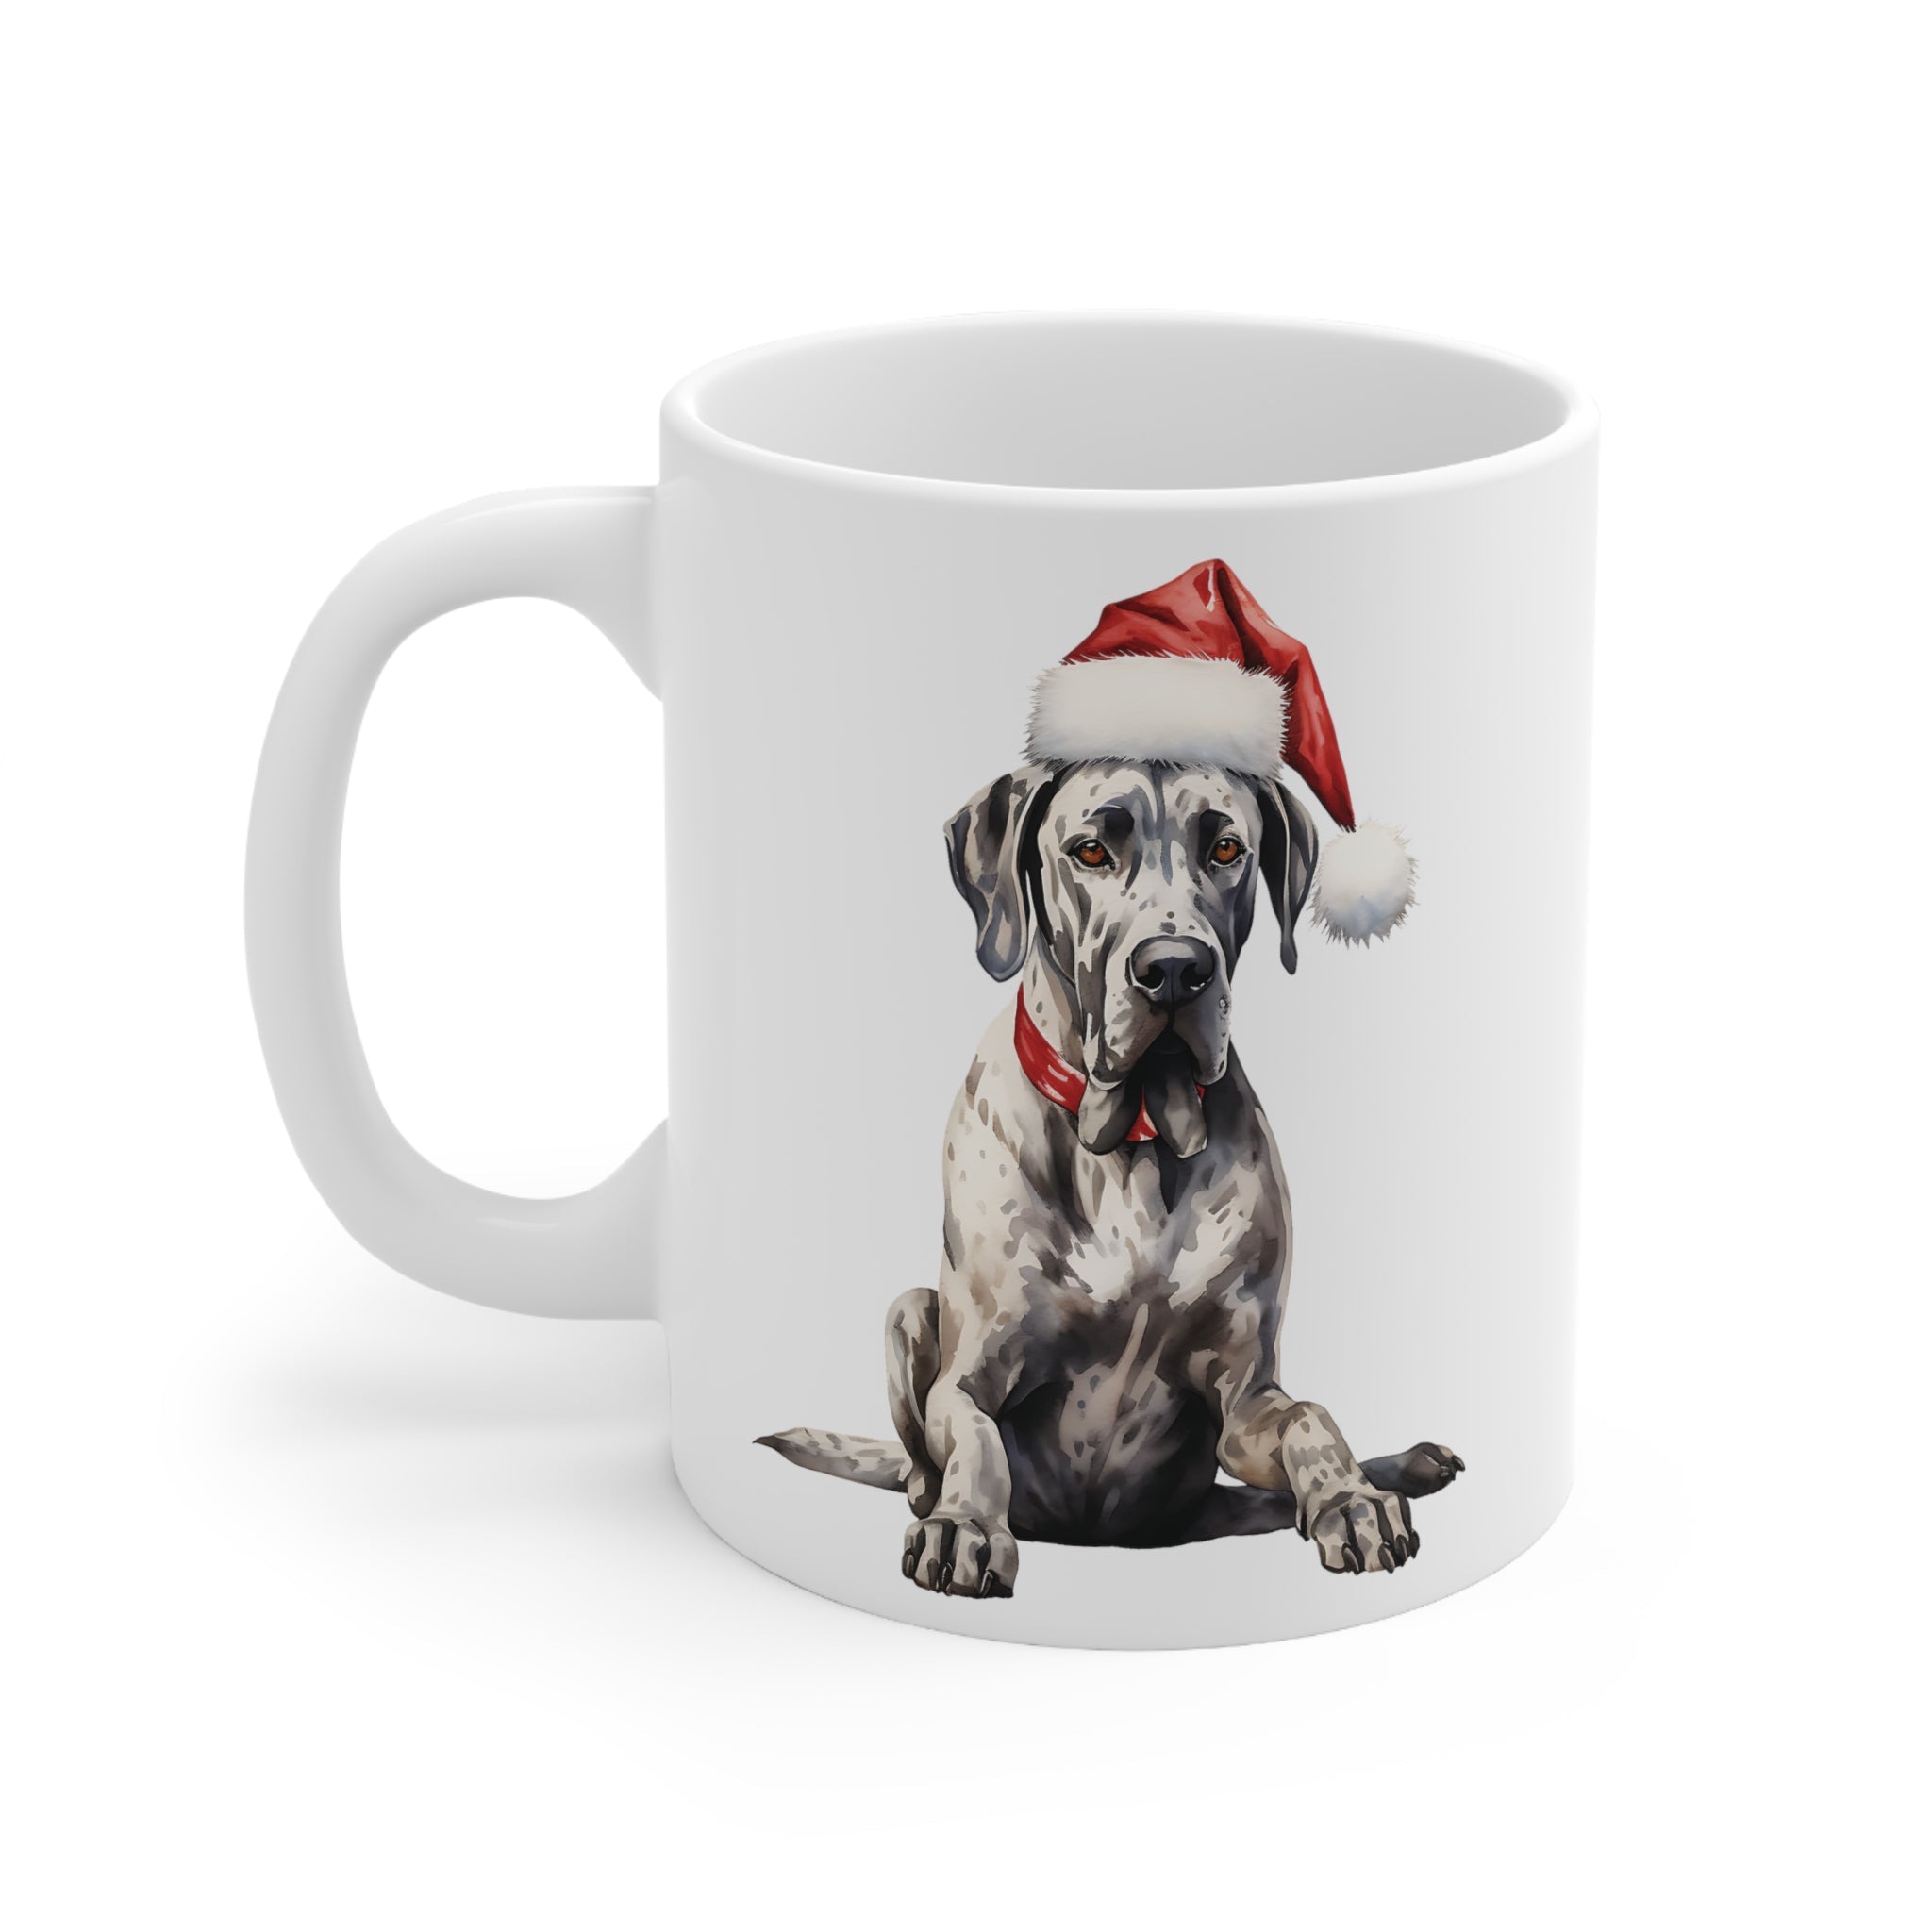 Great Dane, Christmas Dog - 11oz Ceramic Mug - Lead and BPA-free, Dishwasher & Microwave-Safe